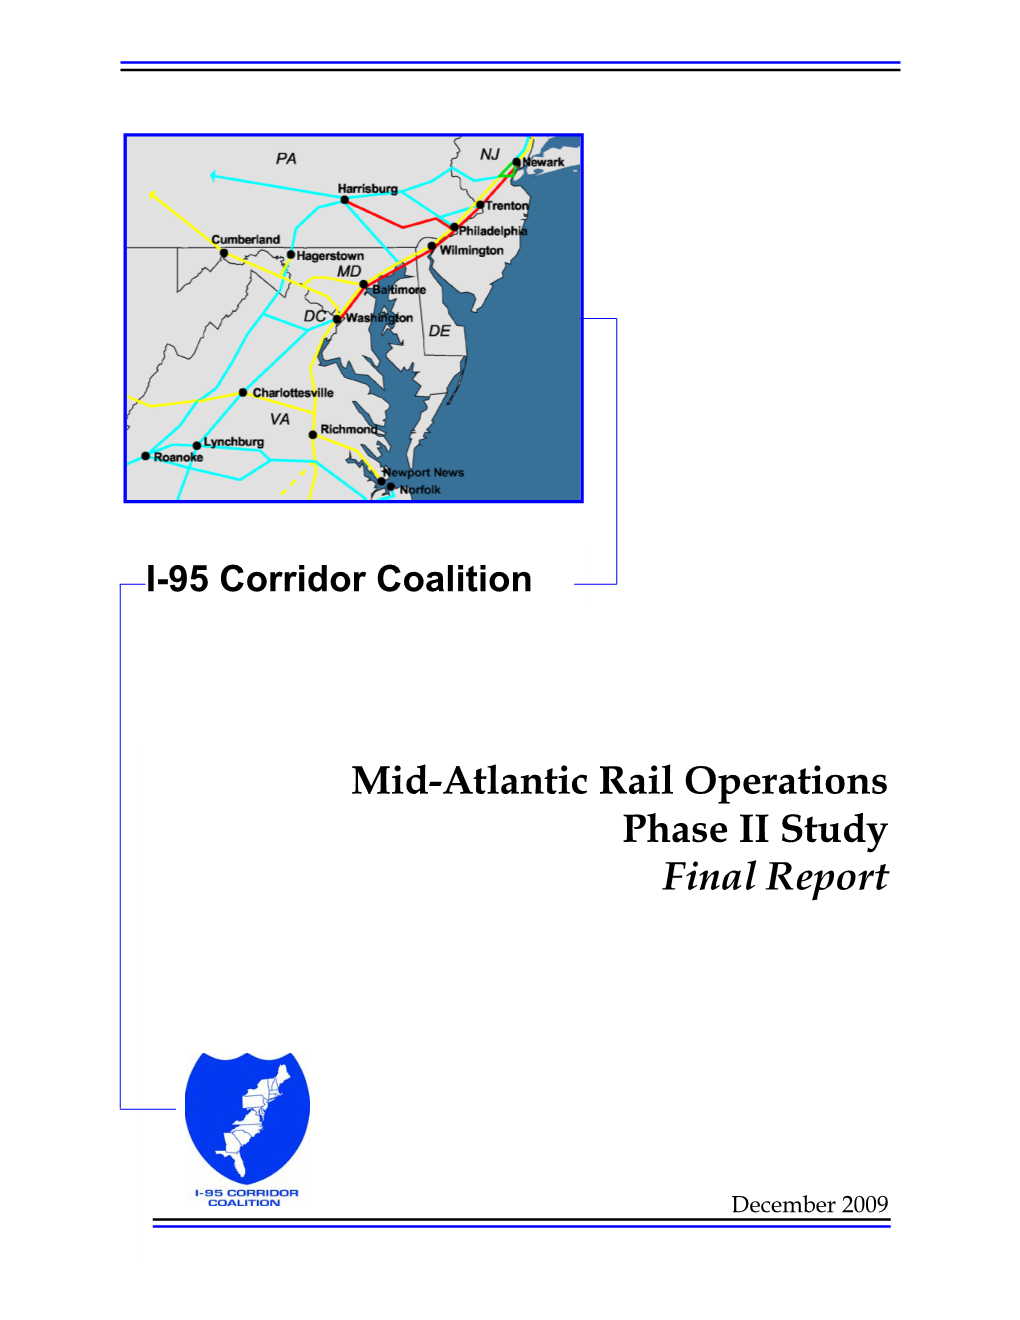 Mid-Atlantic Rail Operations Phase II Study Final Report